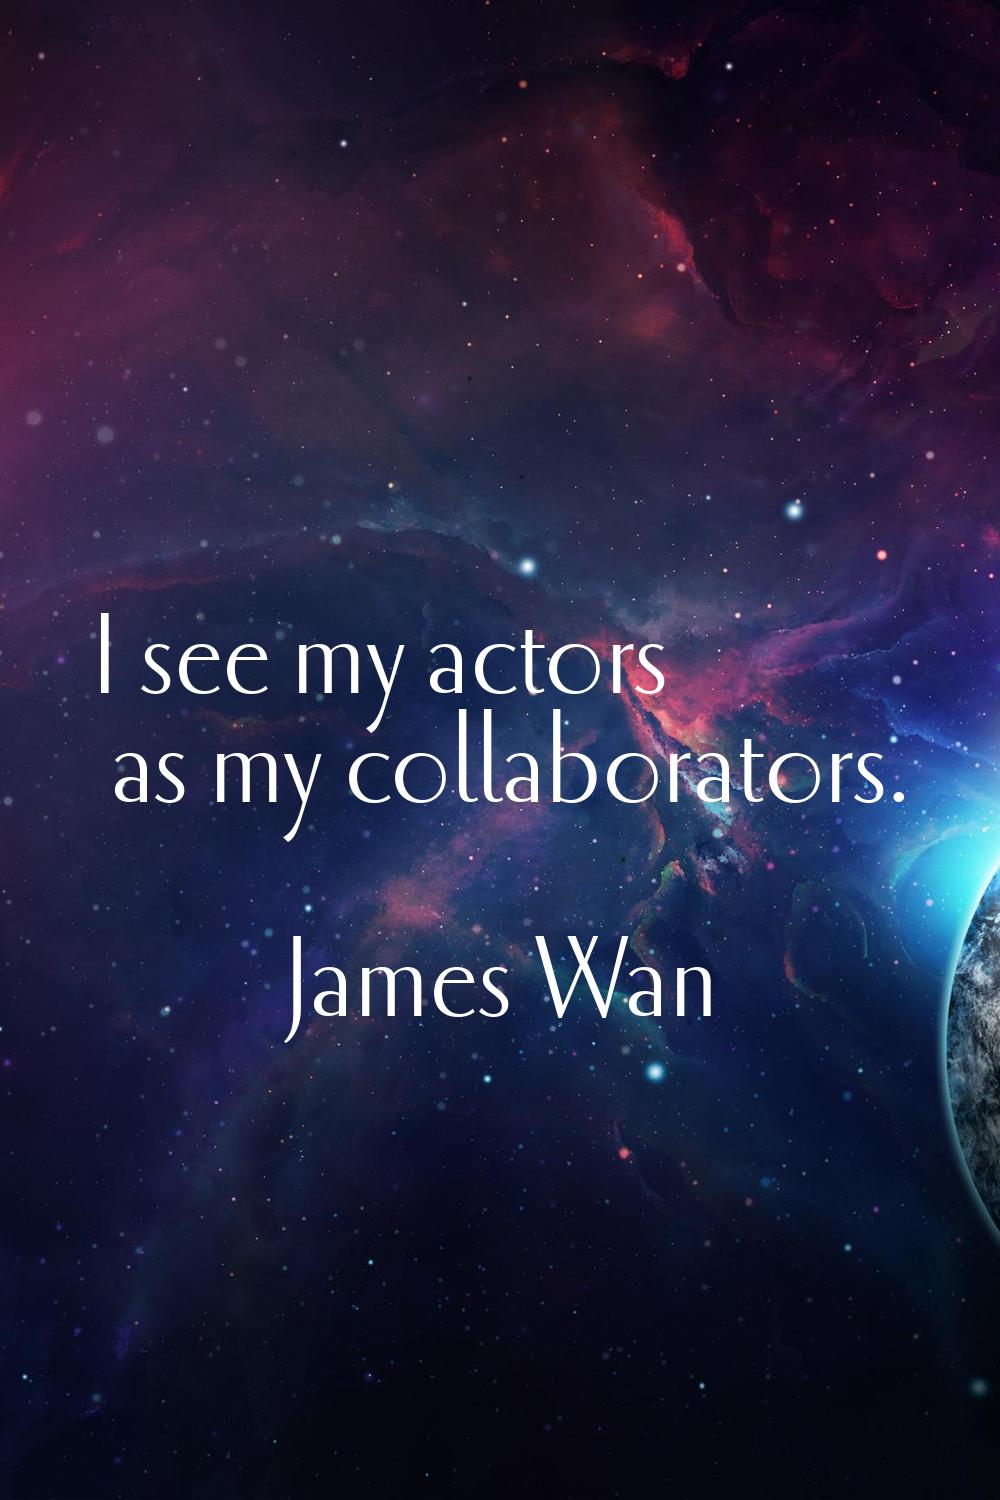 I see my actors as my collaborators.